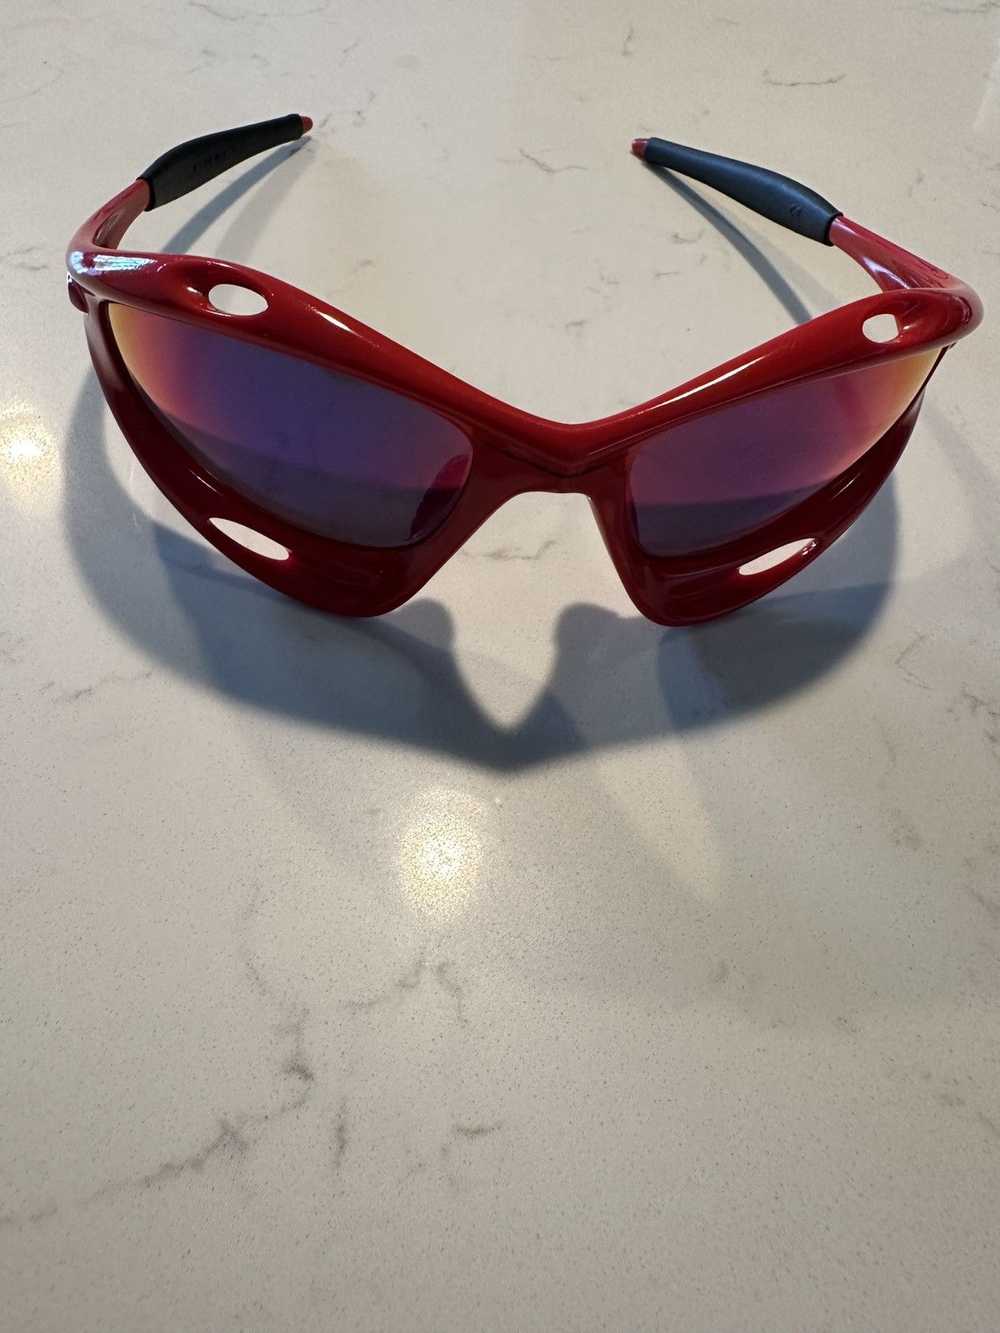 Oakley Oakley Racing Jacket sunglasses - image 6